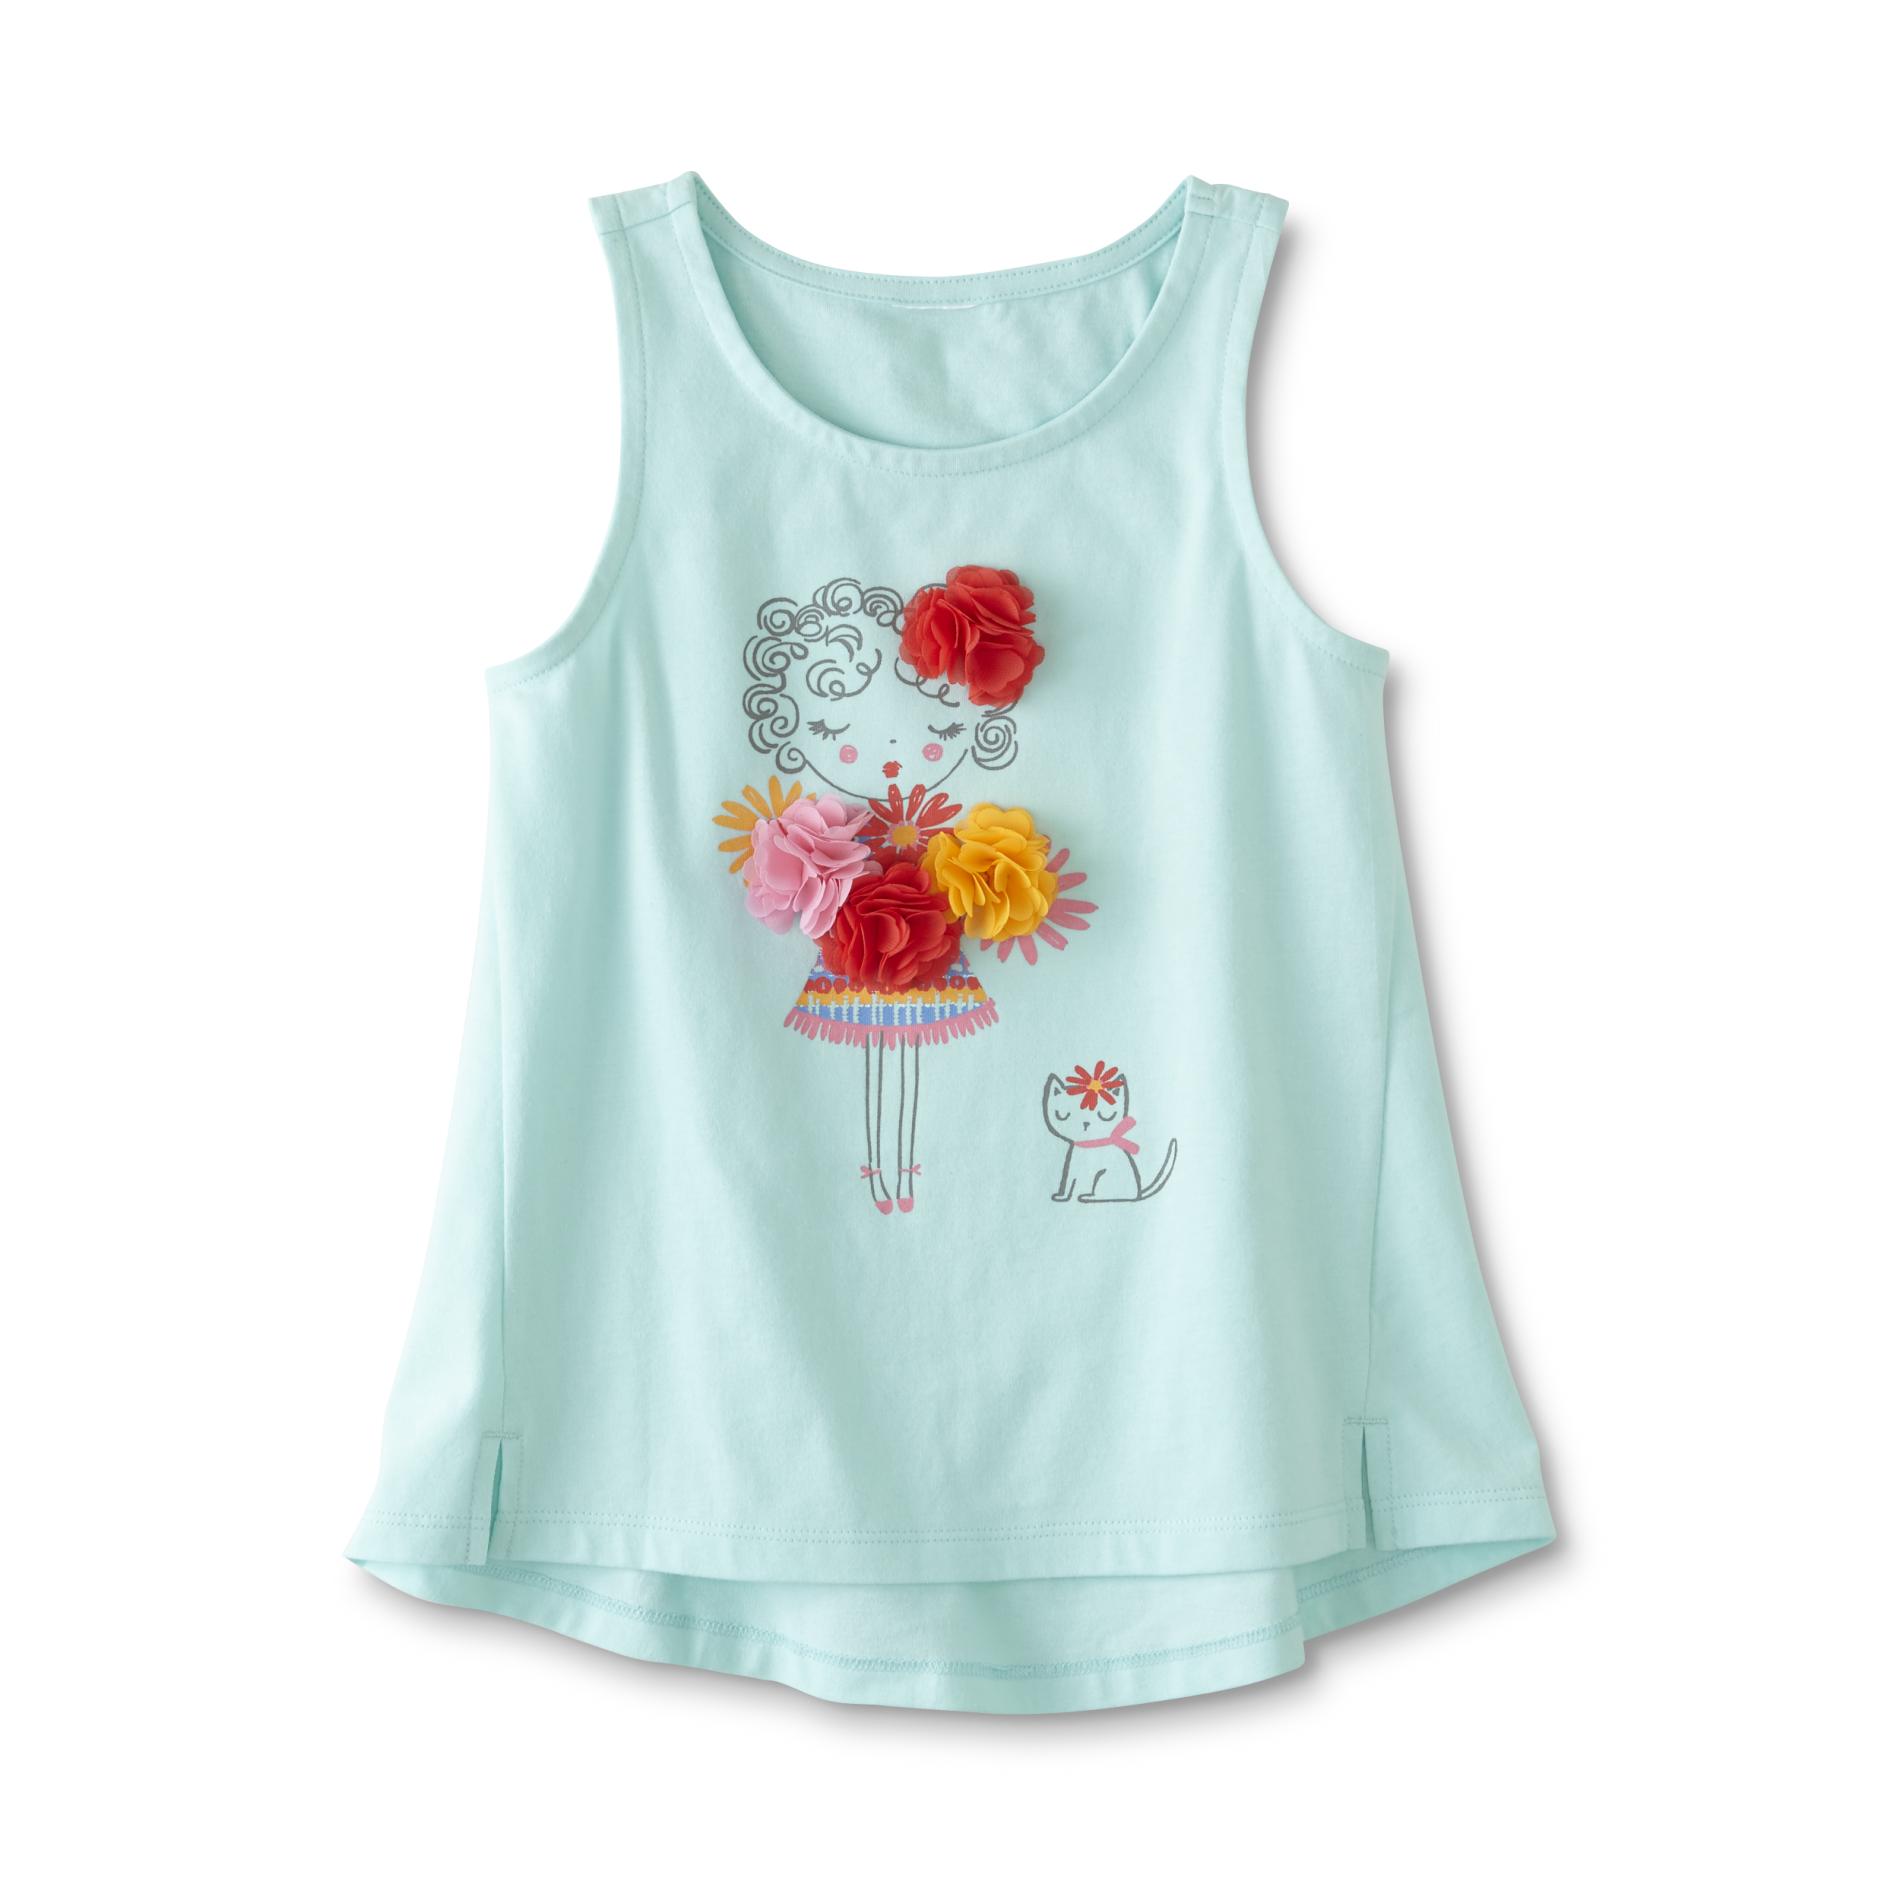 Toughskins Infant & Toddler Girls' Embellished Tank Top - Girl & Cat